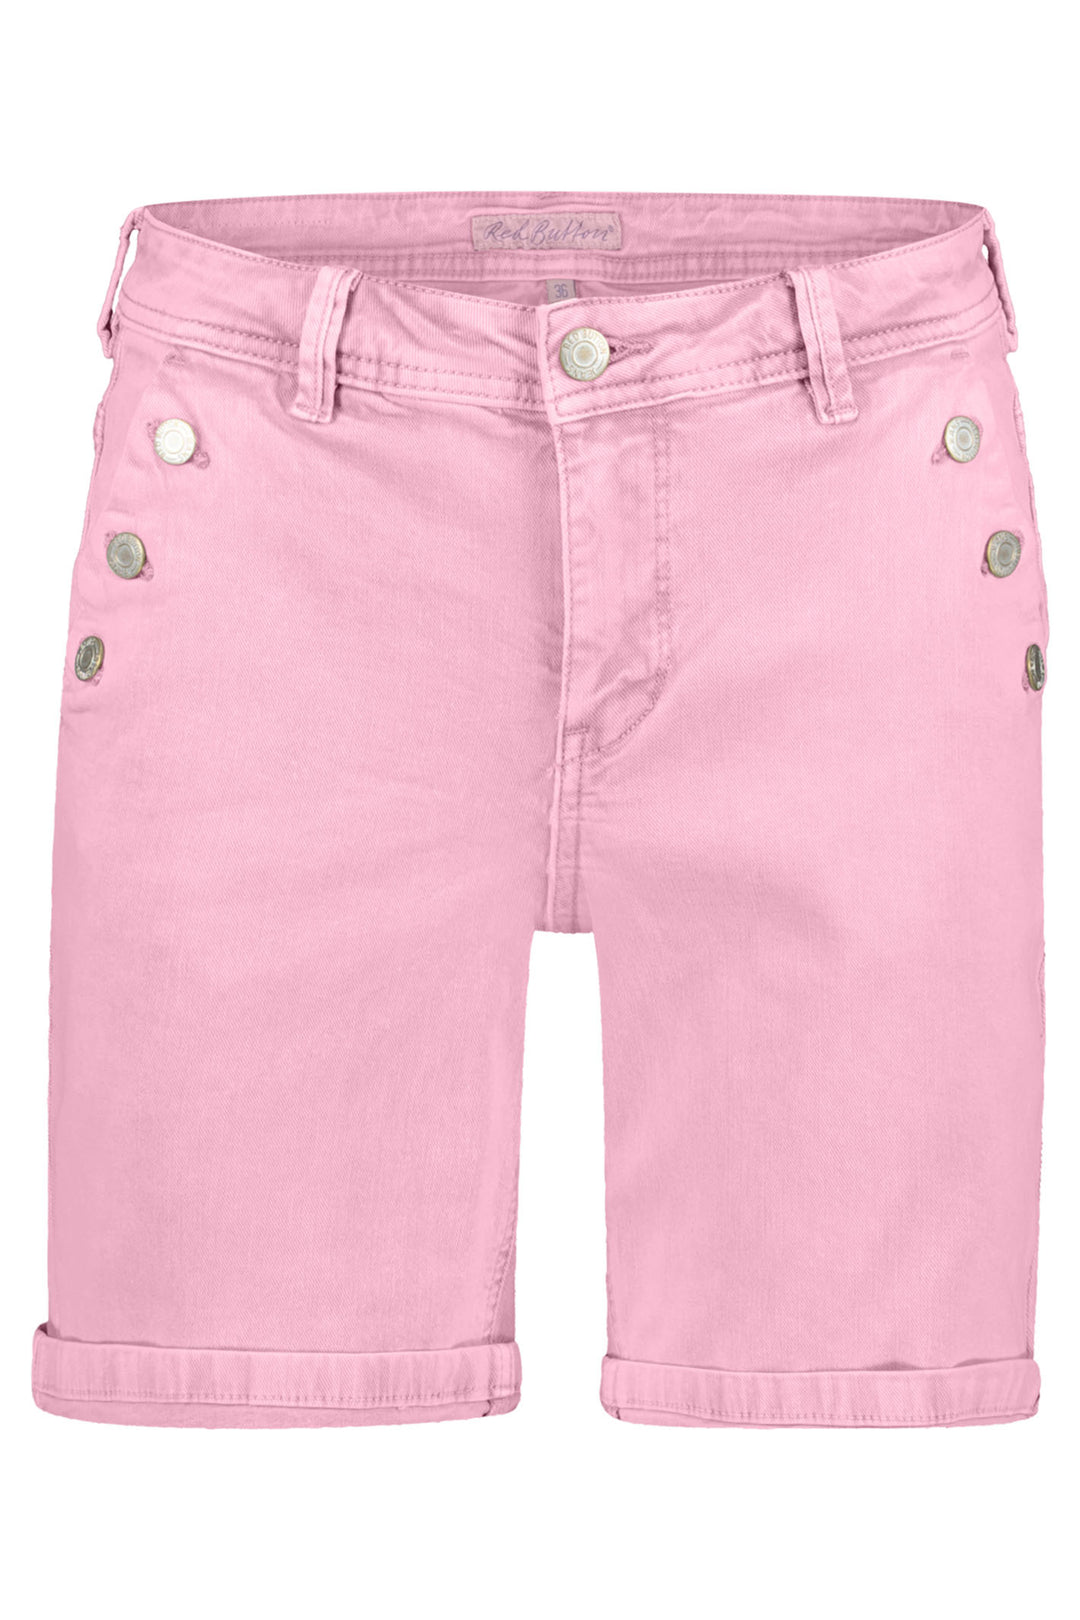 Red Button SRB4229 Bibette Rosebloom Pink Denim Shorts - Dotique